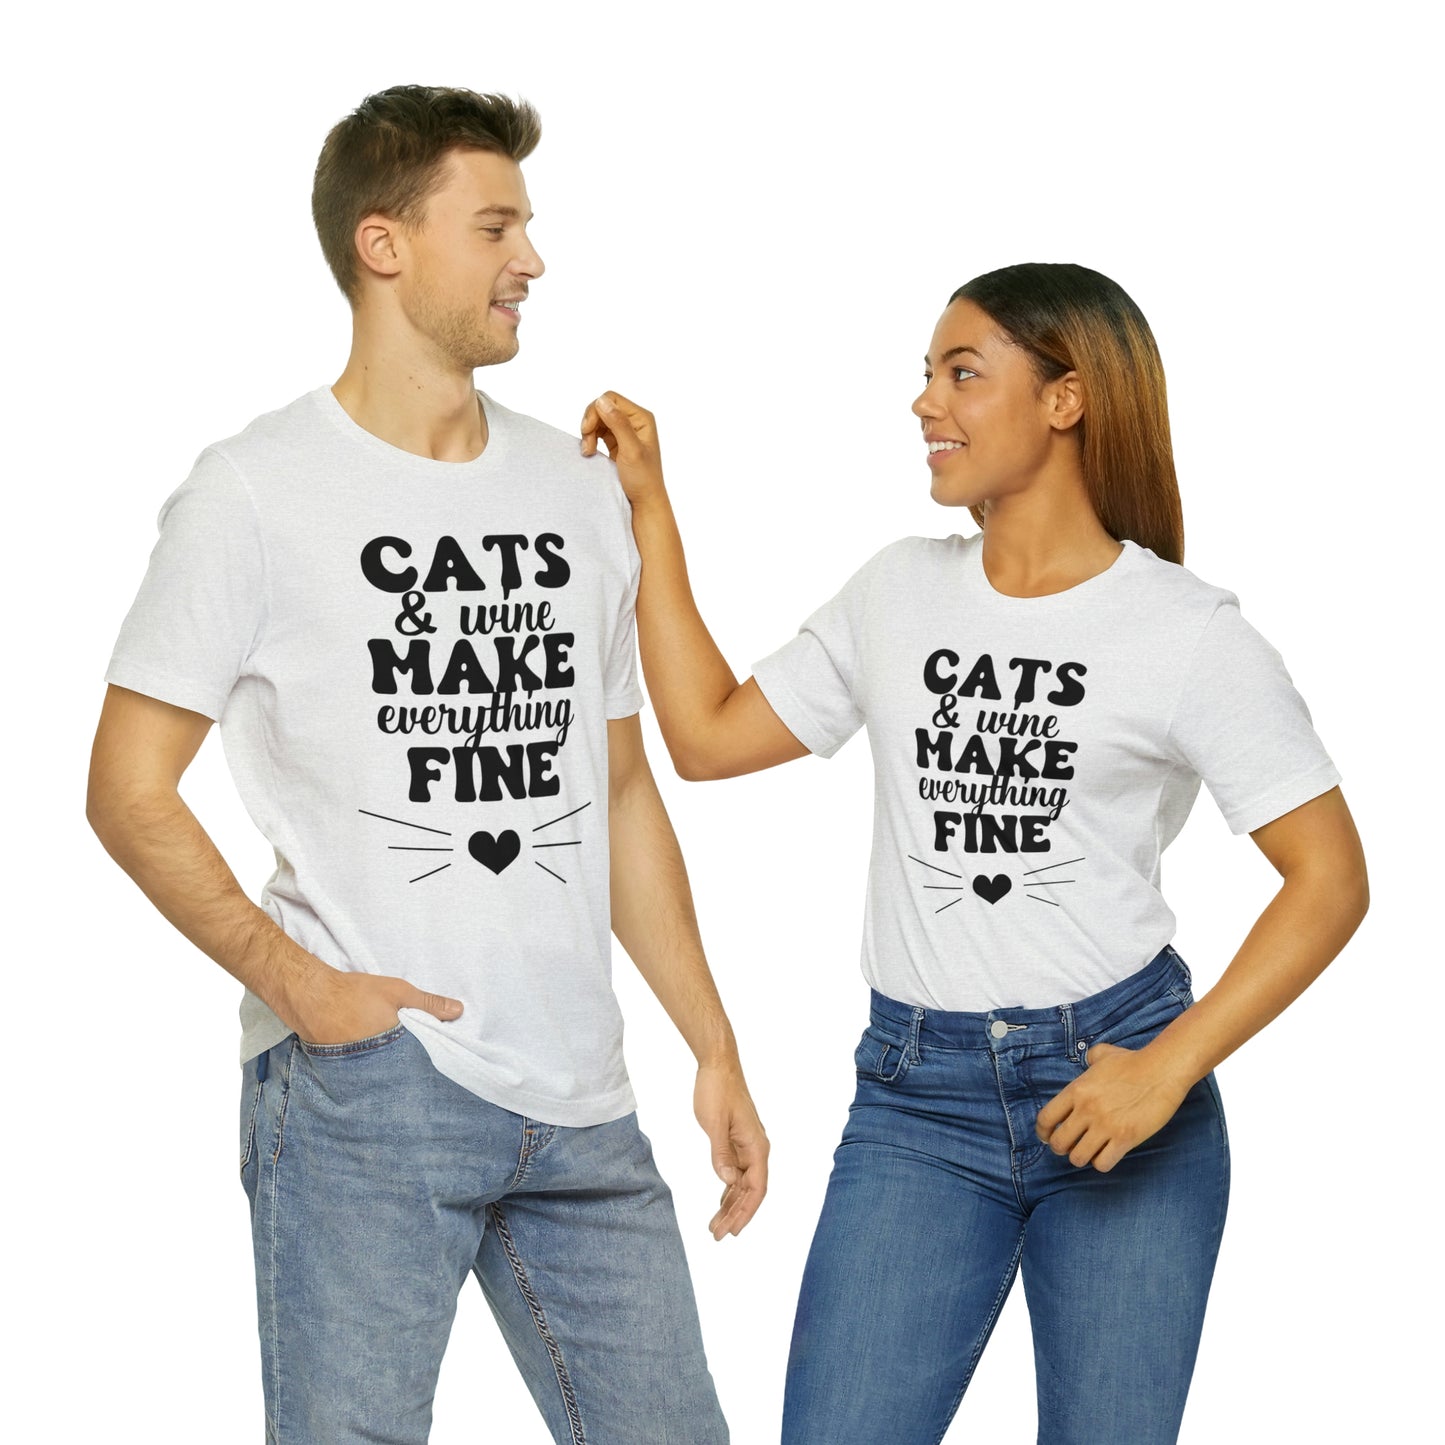 Cats & Wine Make Everything Fine Short Sleeve T-shirt